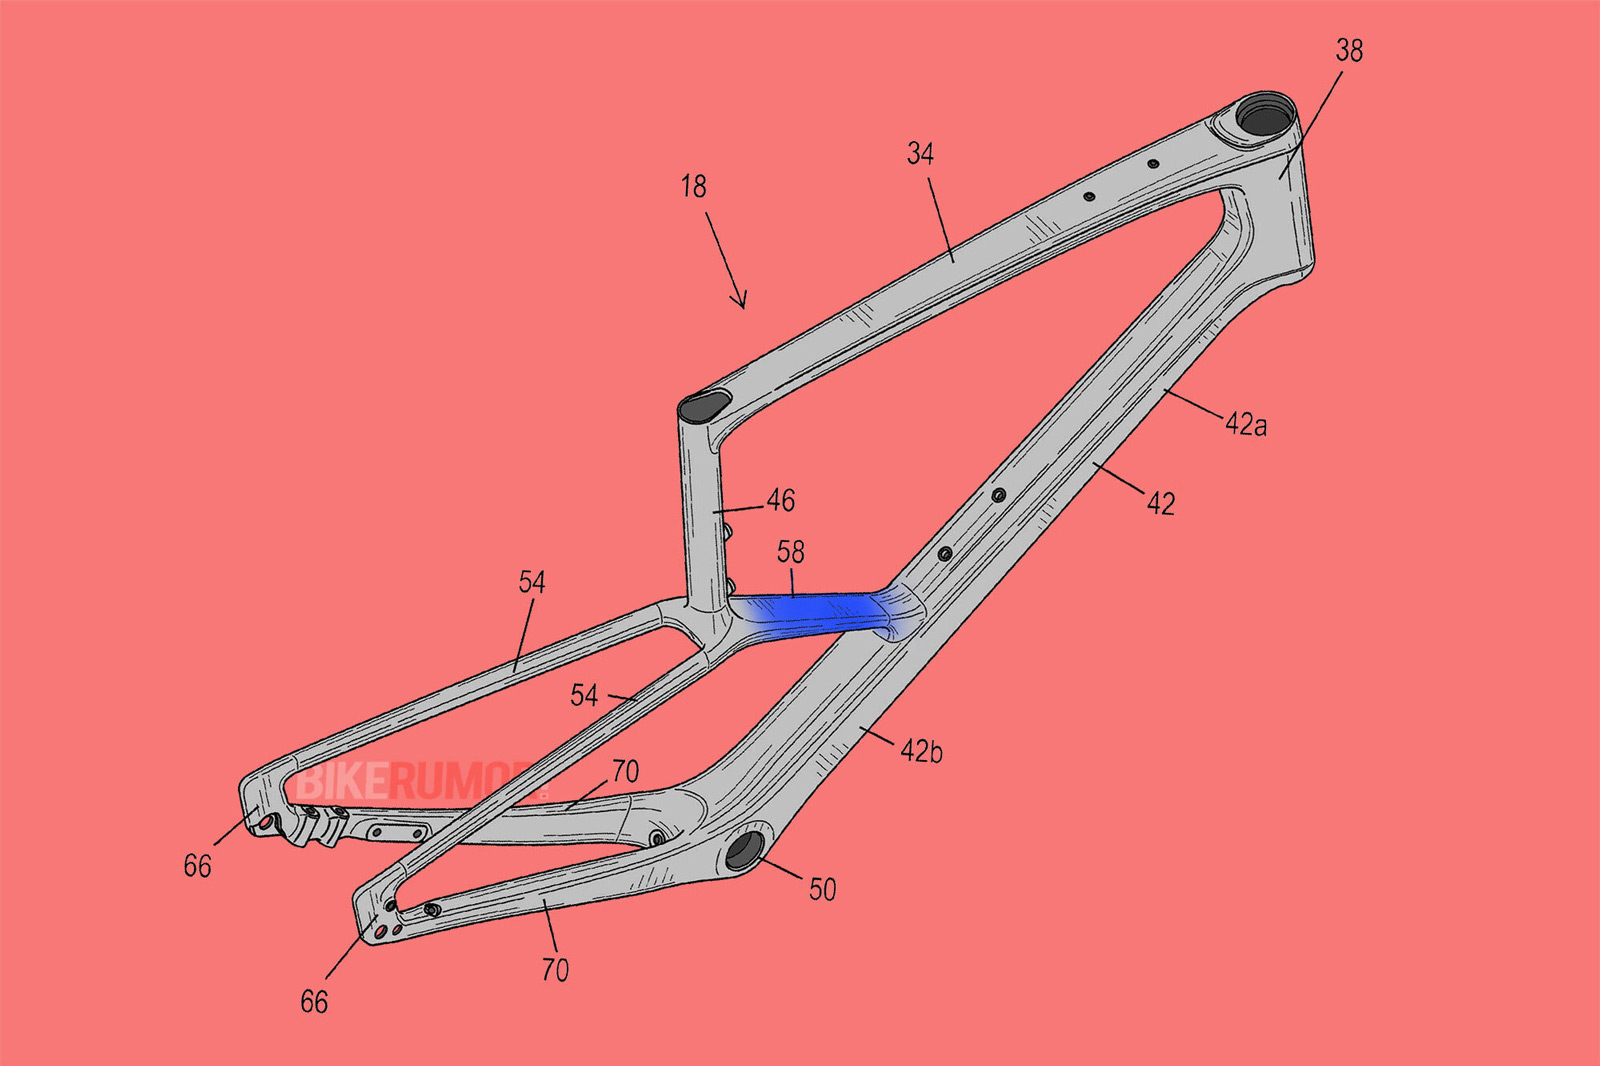 specialized angled strut gravel bike frame added vertical flex